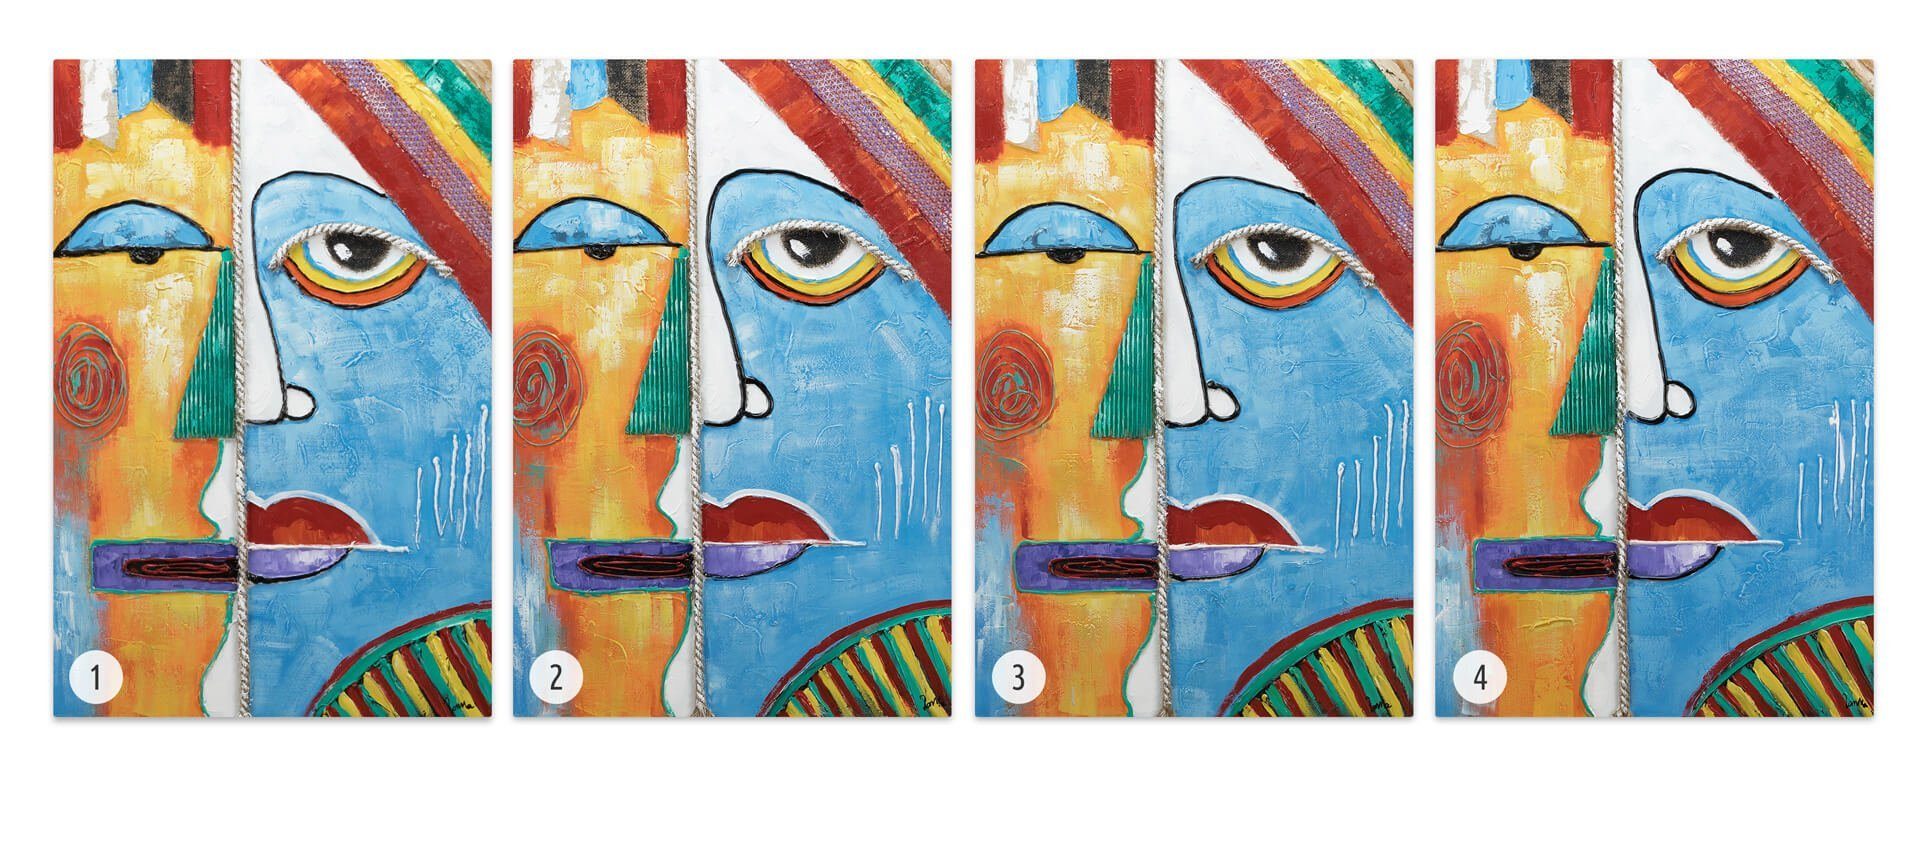 KUNSTLOFT Two Faces 60x90 HANDGEMALT Leinwandbild cm, 100% Wohnzimmer Wandbild Gemälde